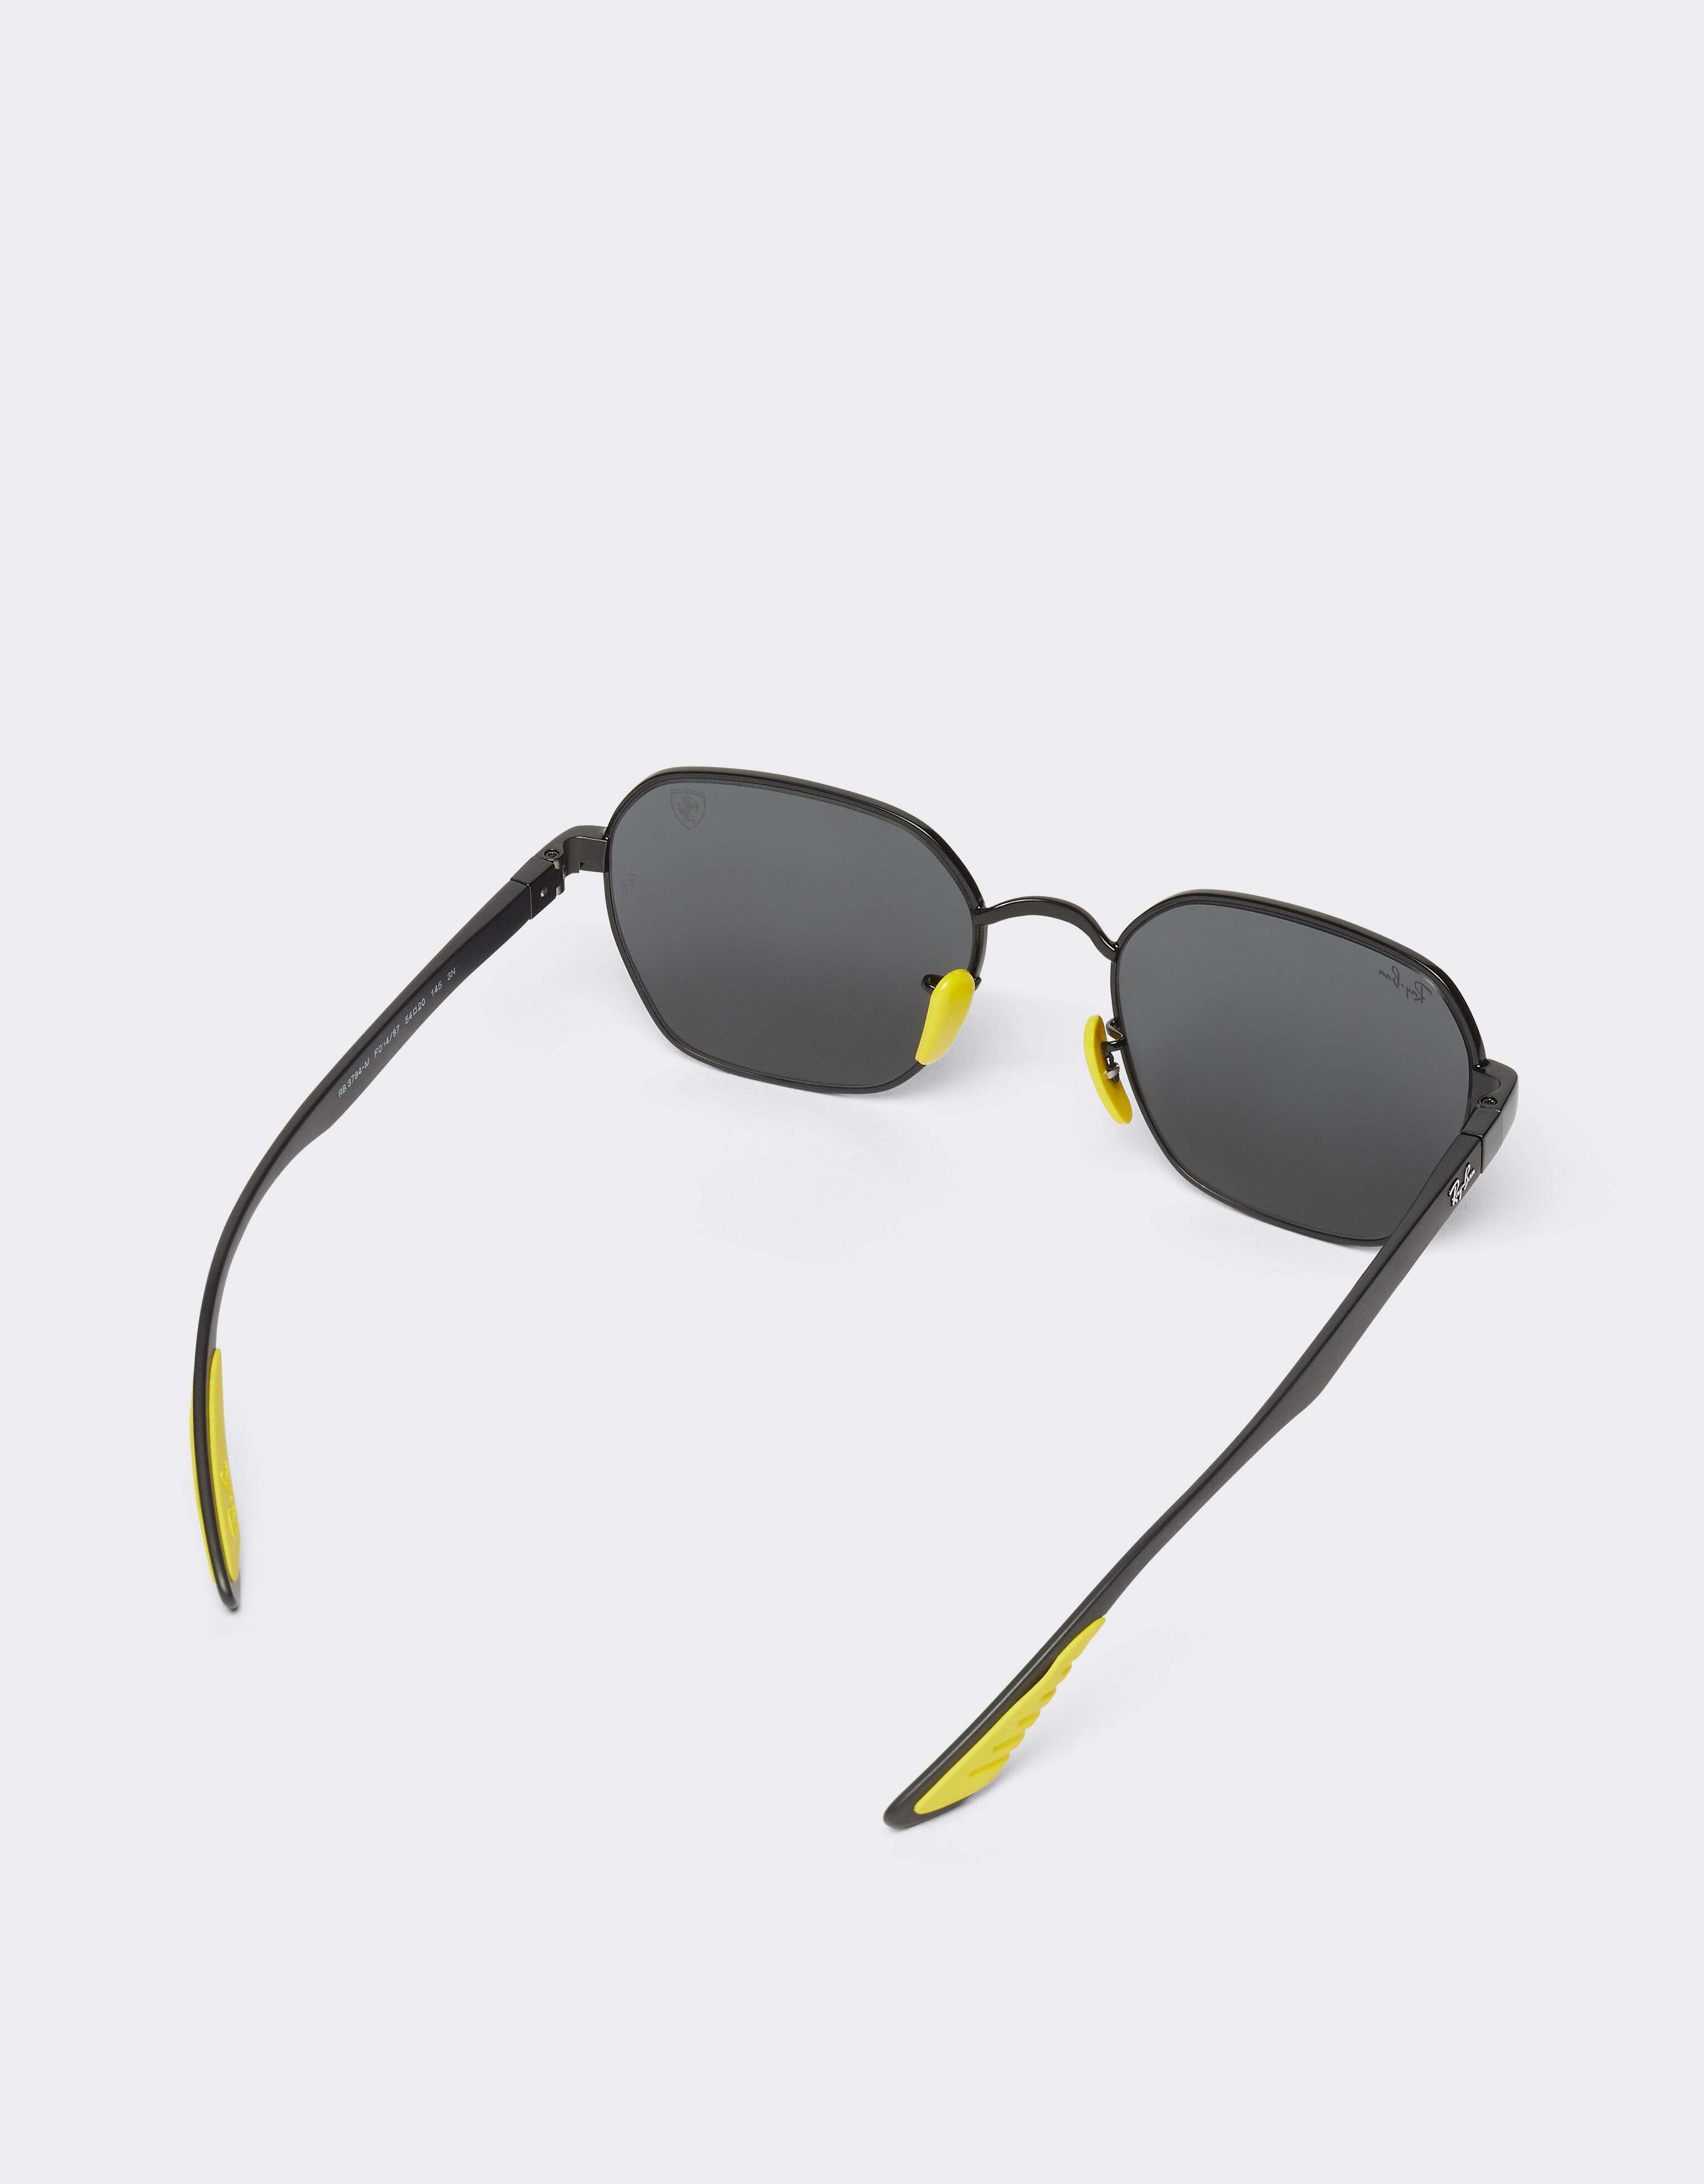 Ferrari Ray-Ban for Scuderia Ferrari 0RB3794M black metal sunglasses with grey lenses Black F1301f